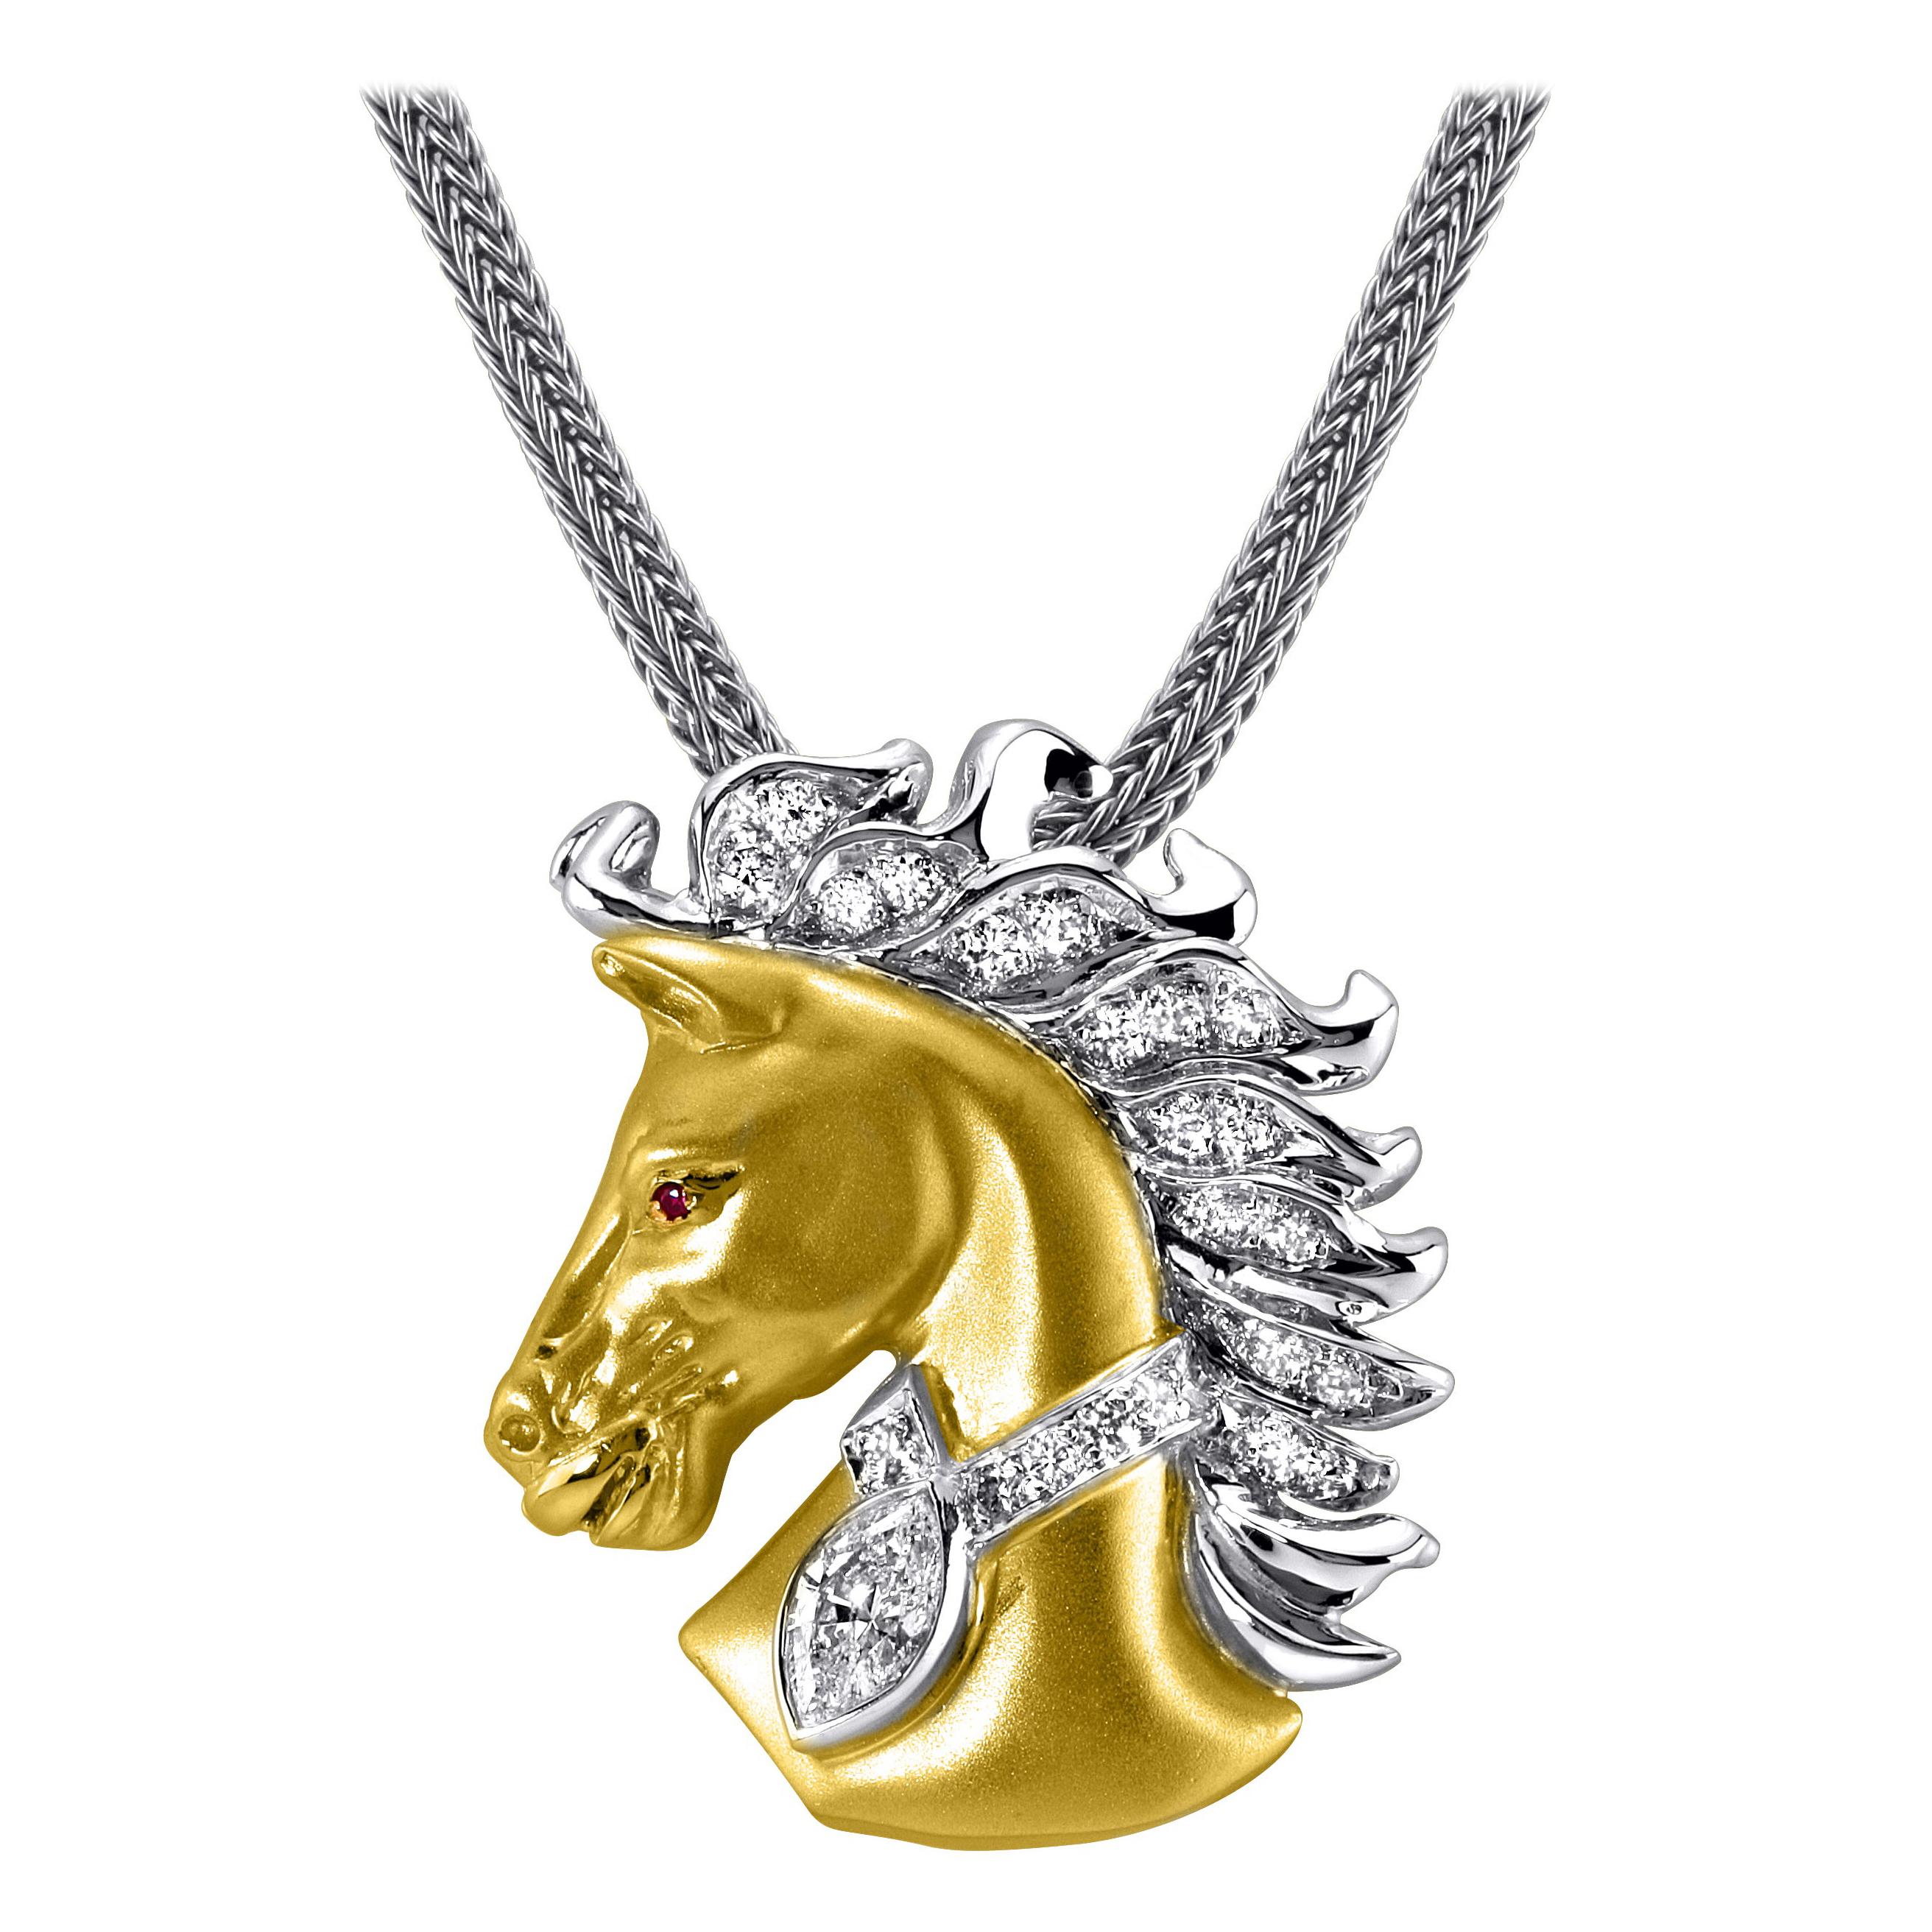 Pendentif cheval en or bicolore 14 carats avec diamant marquis de 1,78 carat, design primé 22 carats